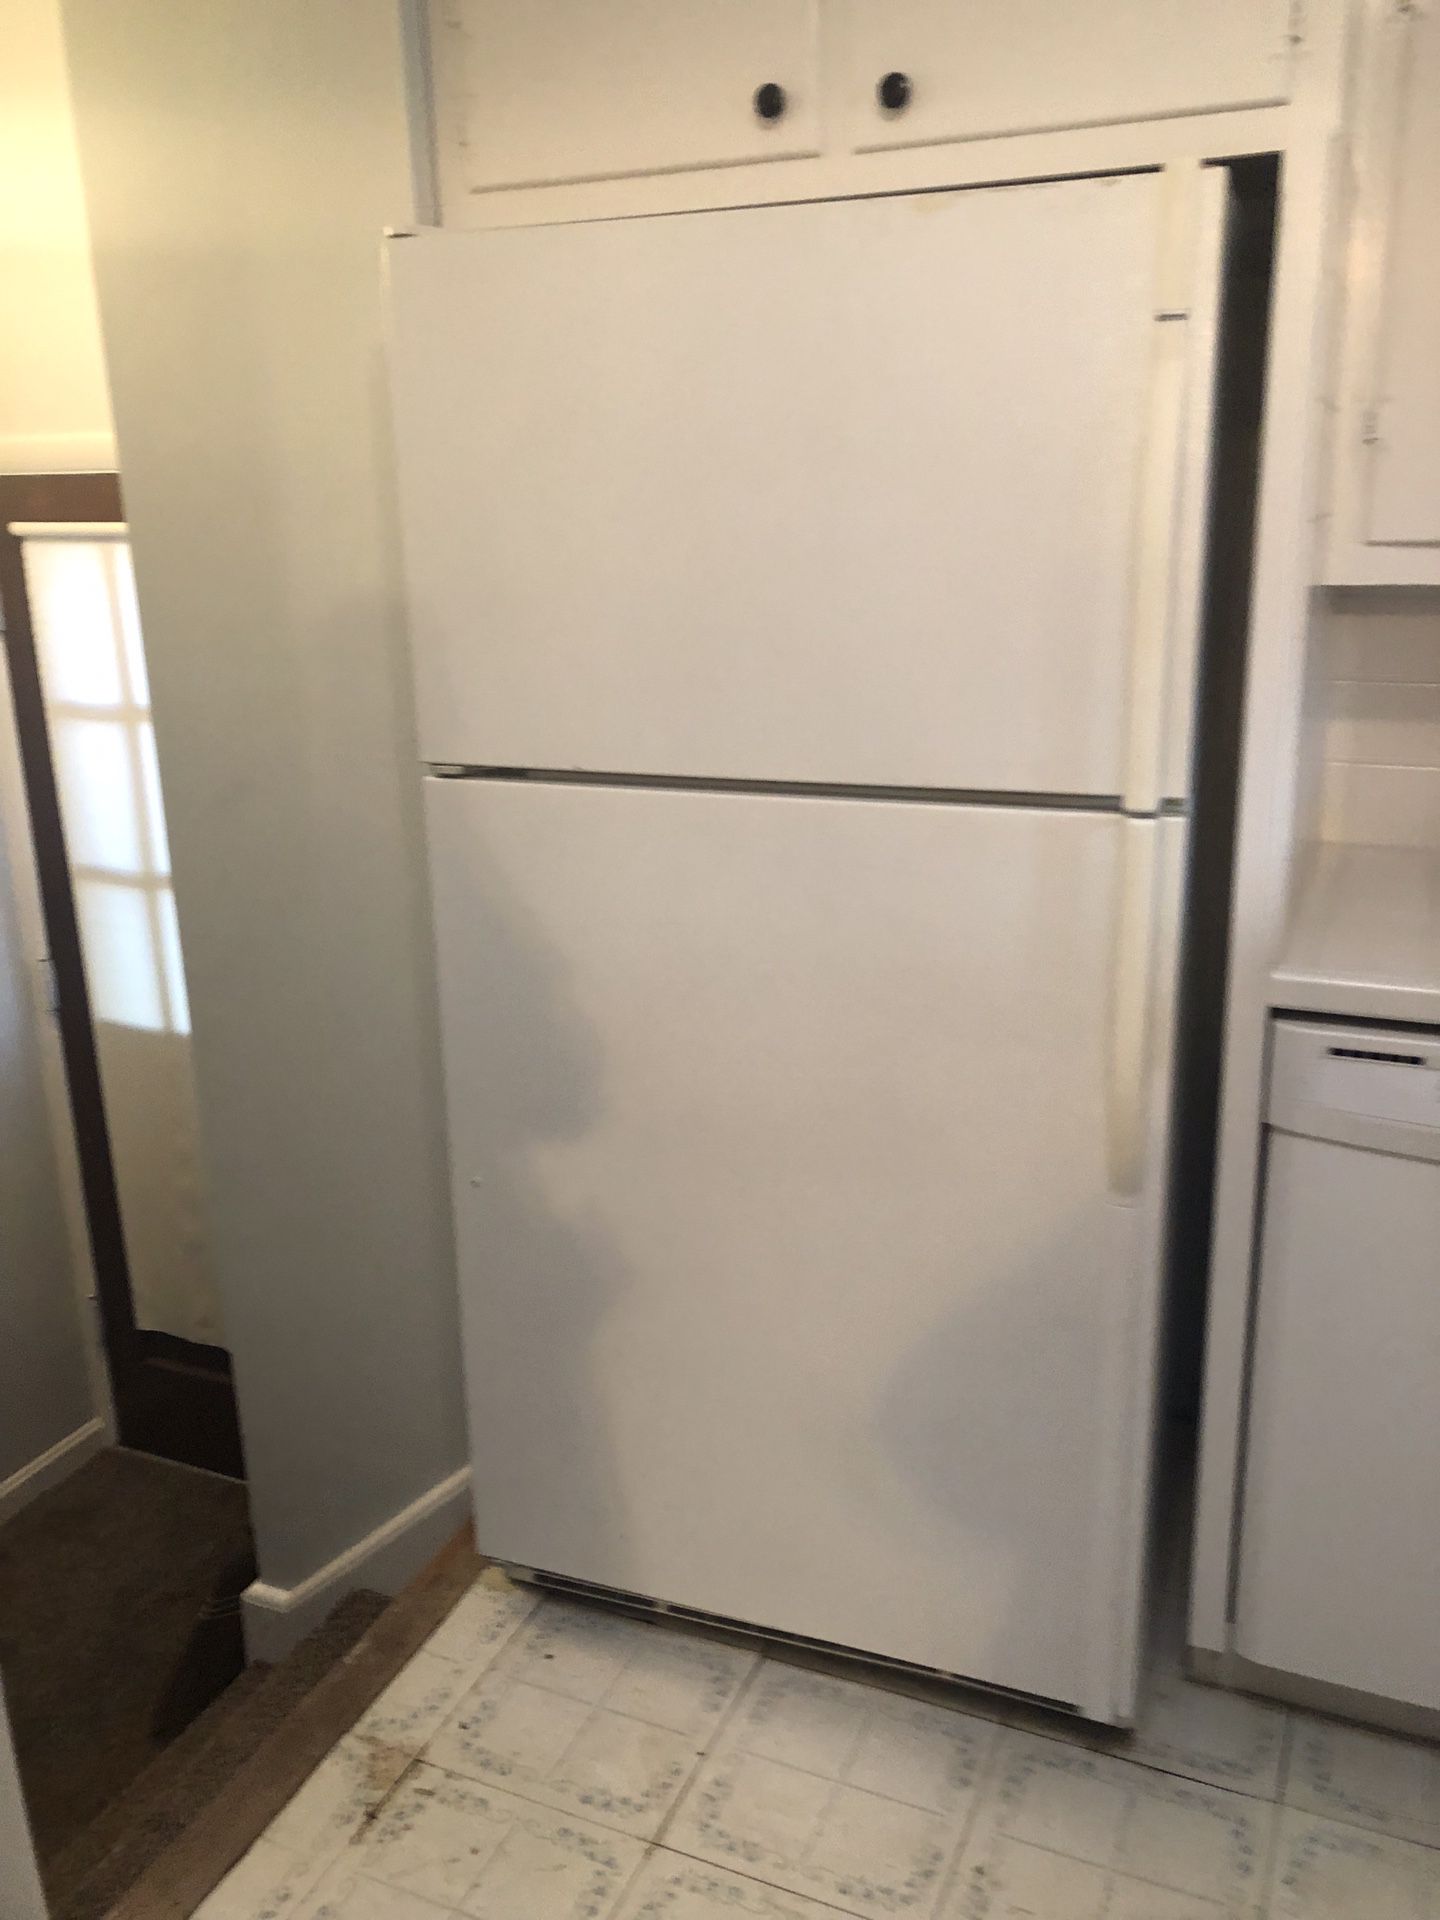 Refrigerator and Dishwasher